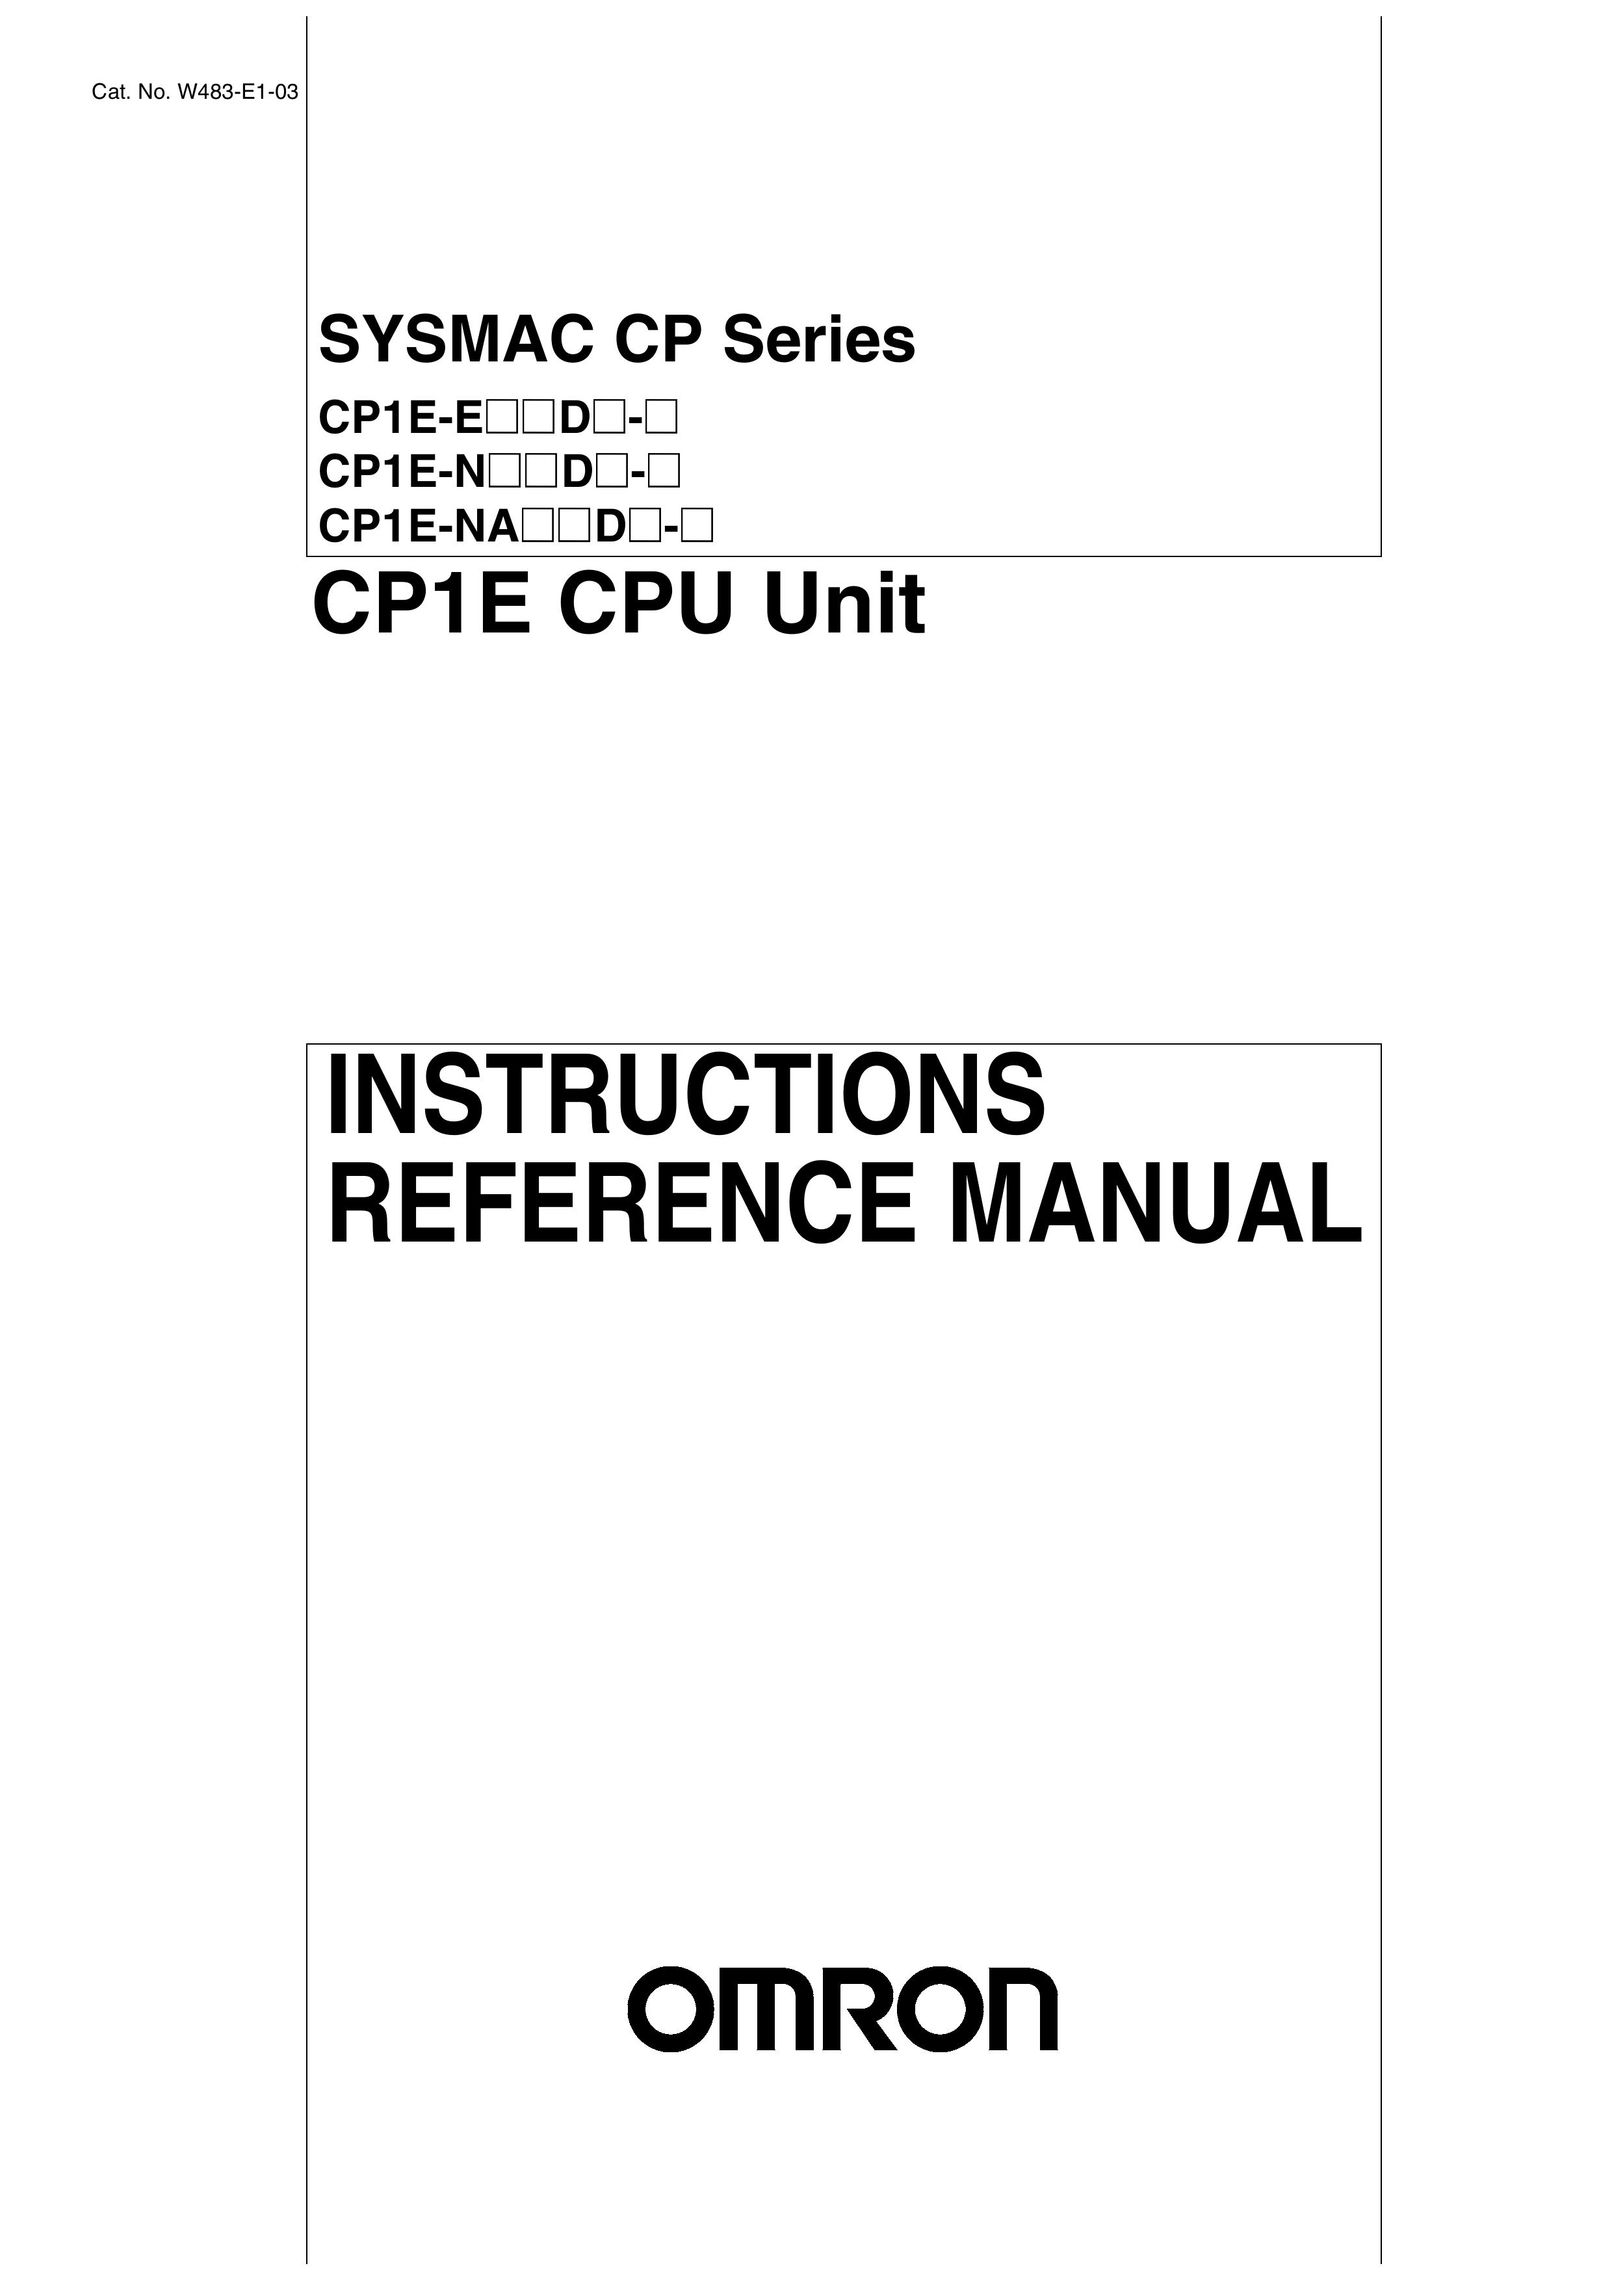 Omron CP1E-N@@D@-@ Computer Hardware User Manual